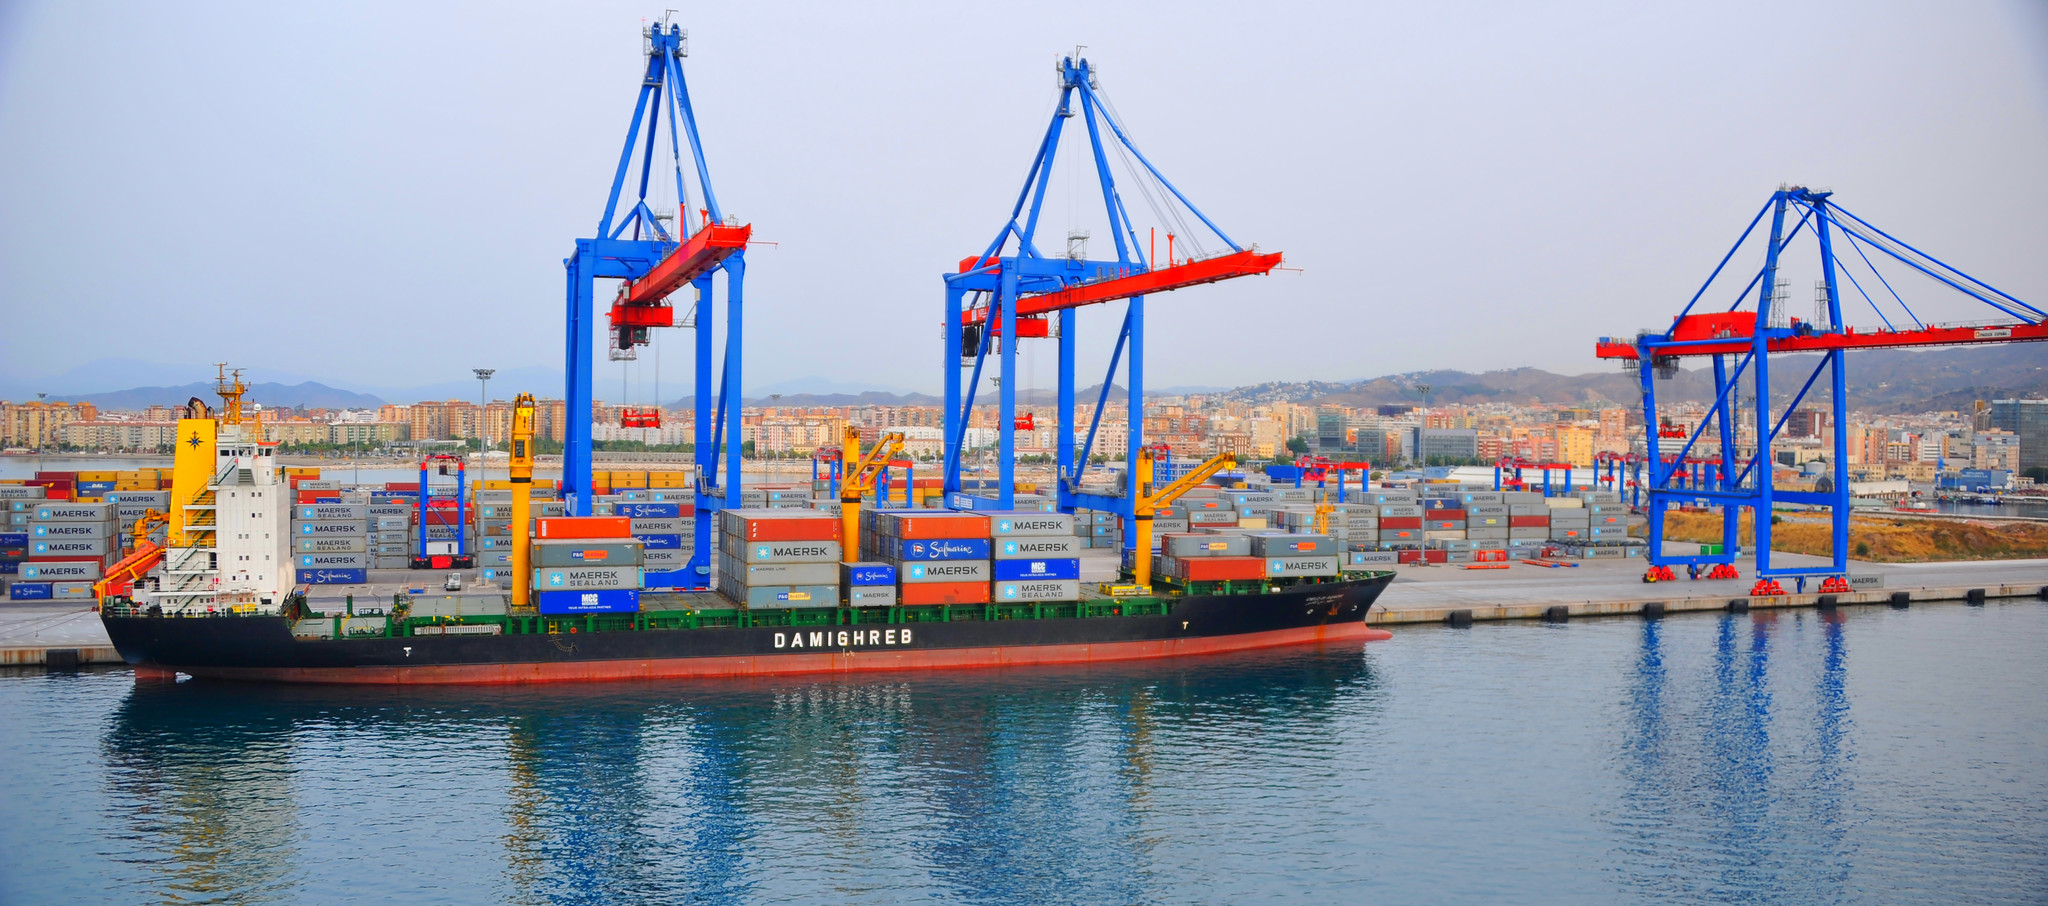 a cargo ship in port